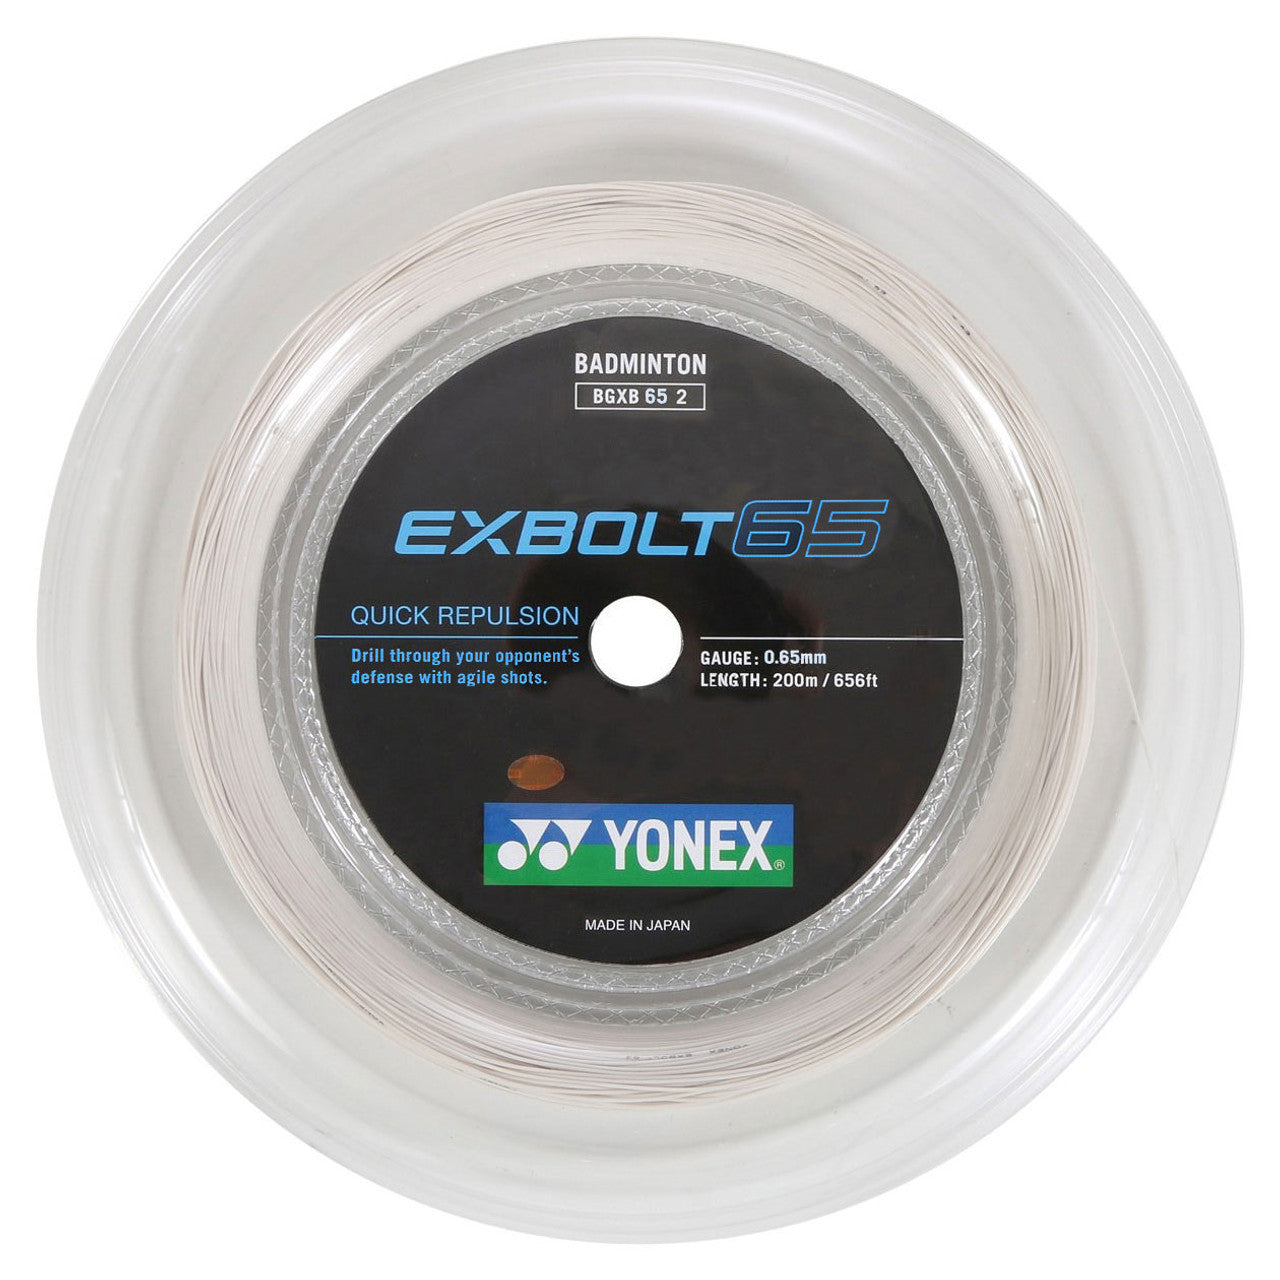 Yonex reel Exbolt 65 White (200M)